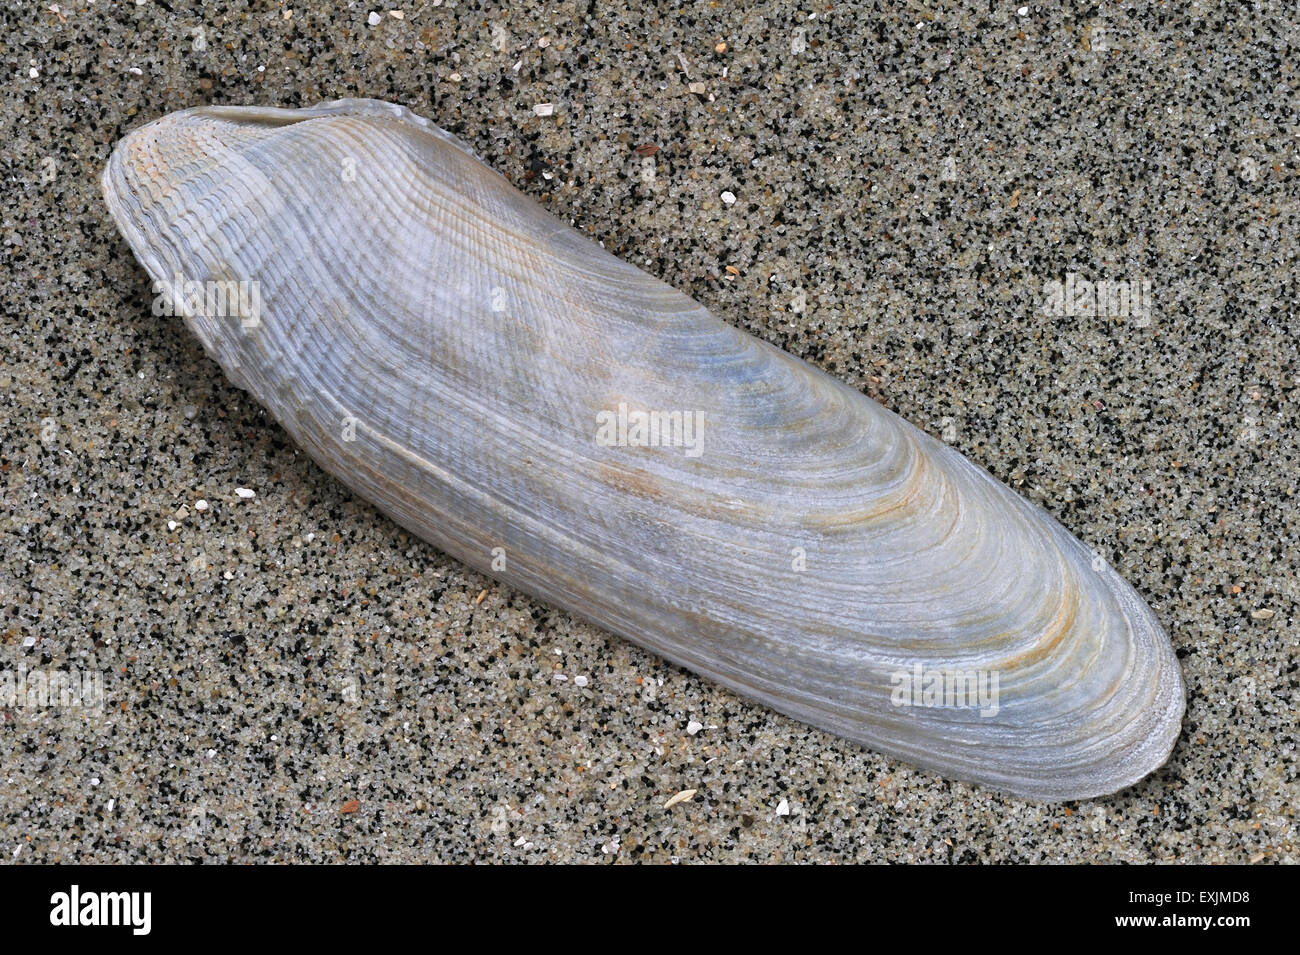 Common piddock (Pholas dactylus) shell on beach Stock Photo